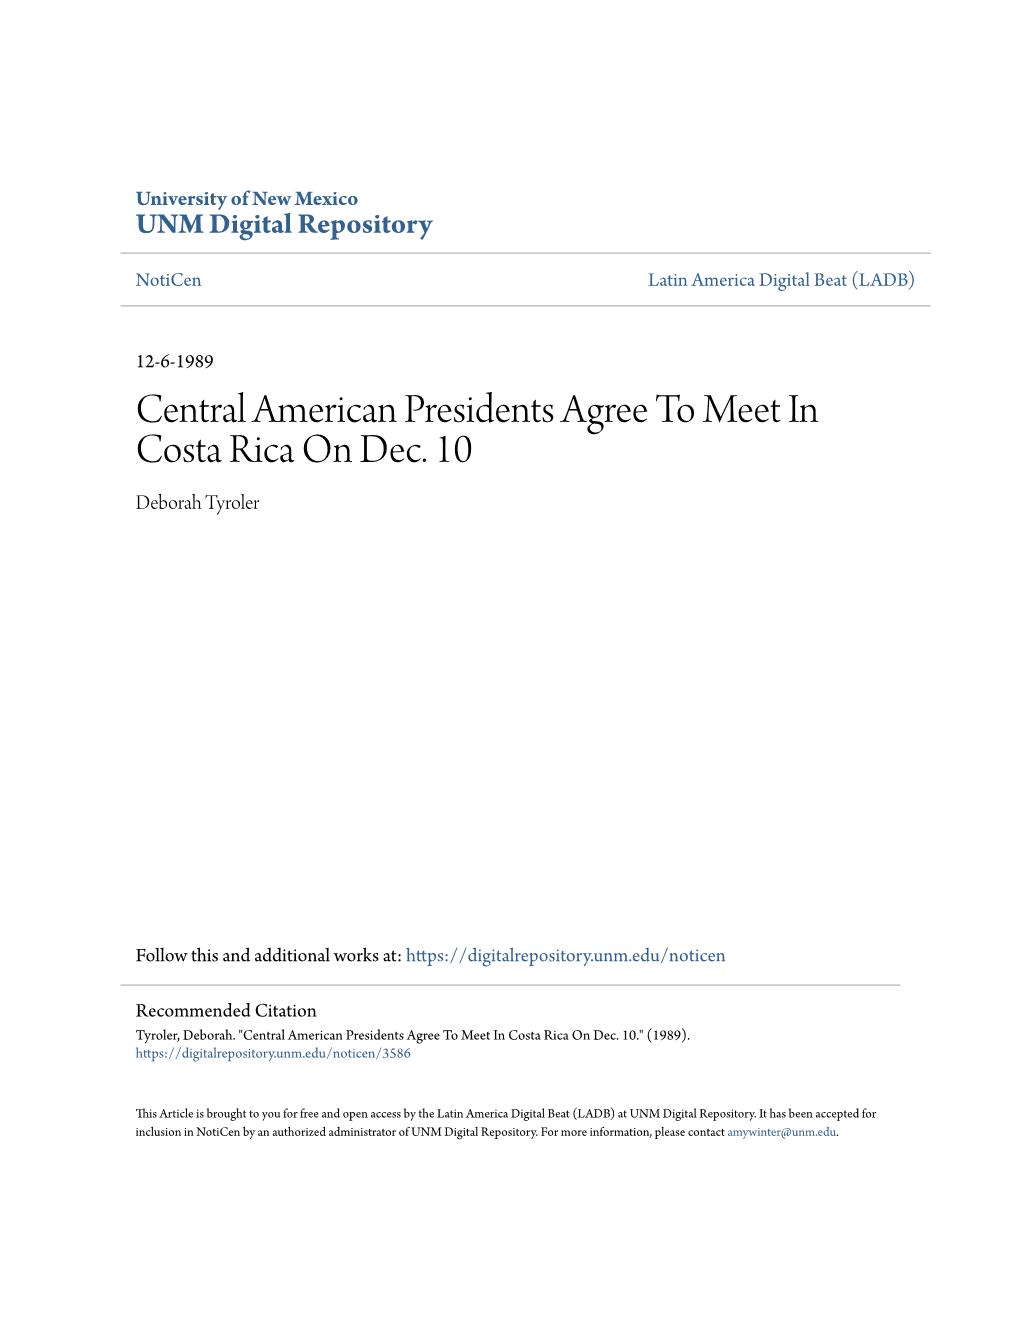 Central American Presidents Agree to Meet in Costa Rica on Dec. 10 Deborah Tyroler